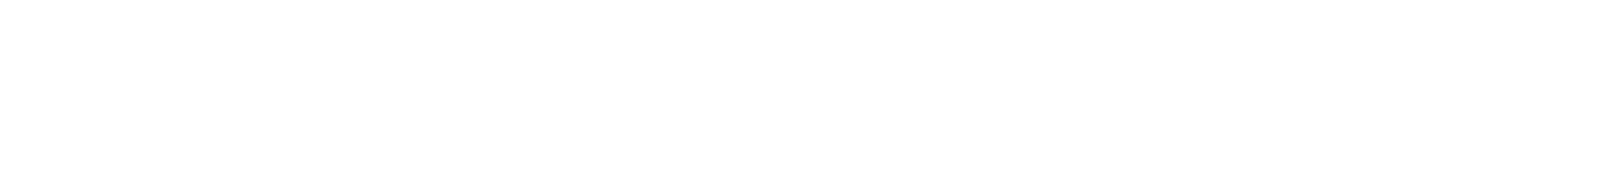 Meta (Facebook) Logo groß für dunkle Hintergründe (transparentes PNG)